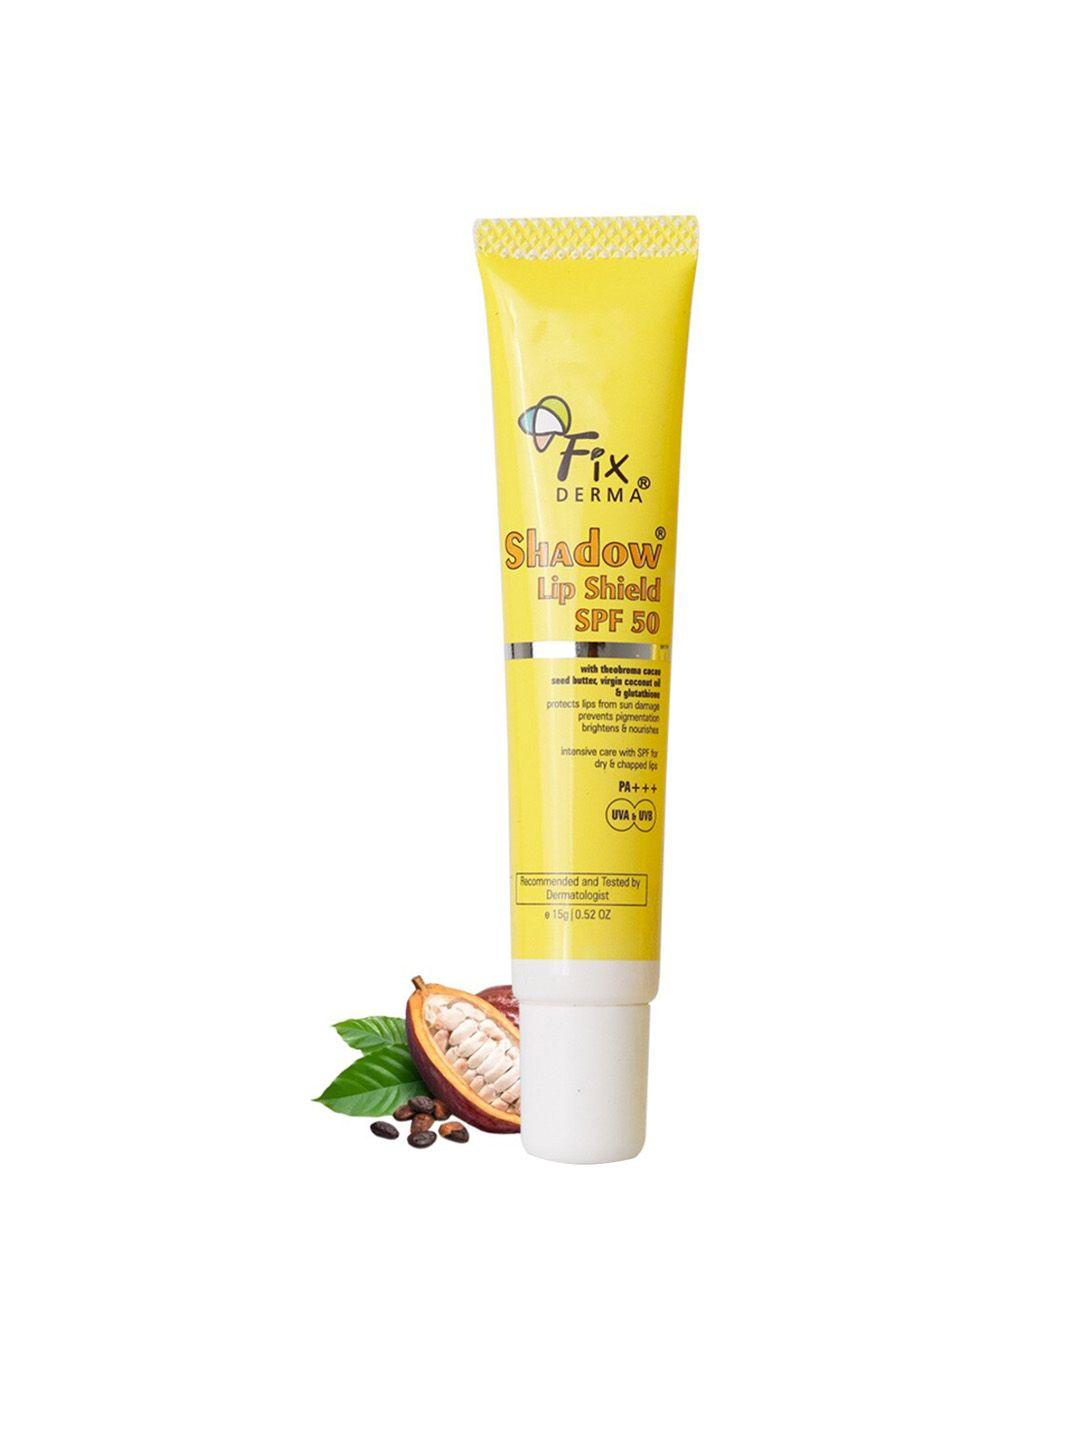 fixderma shadow spf 50 pa+++ uva & uvb lip shield sunscreen with coconut oil - 15 g